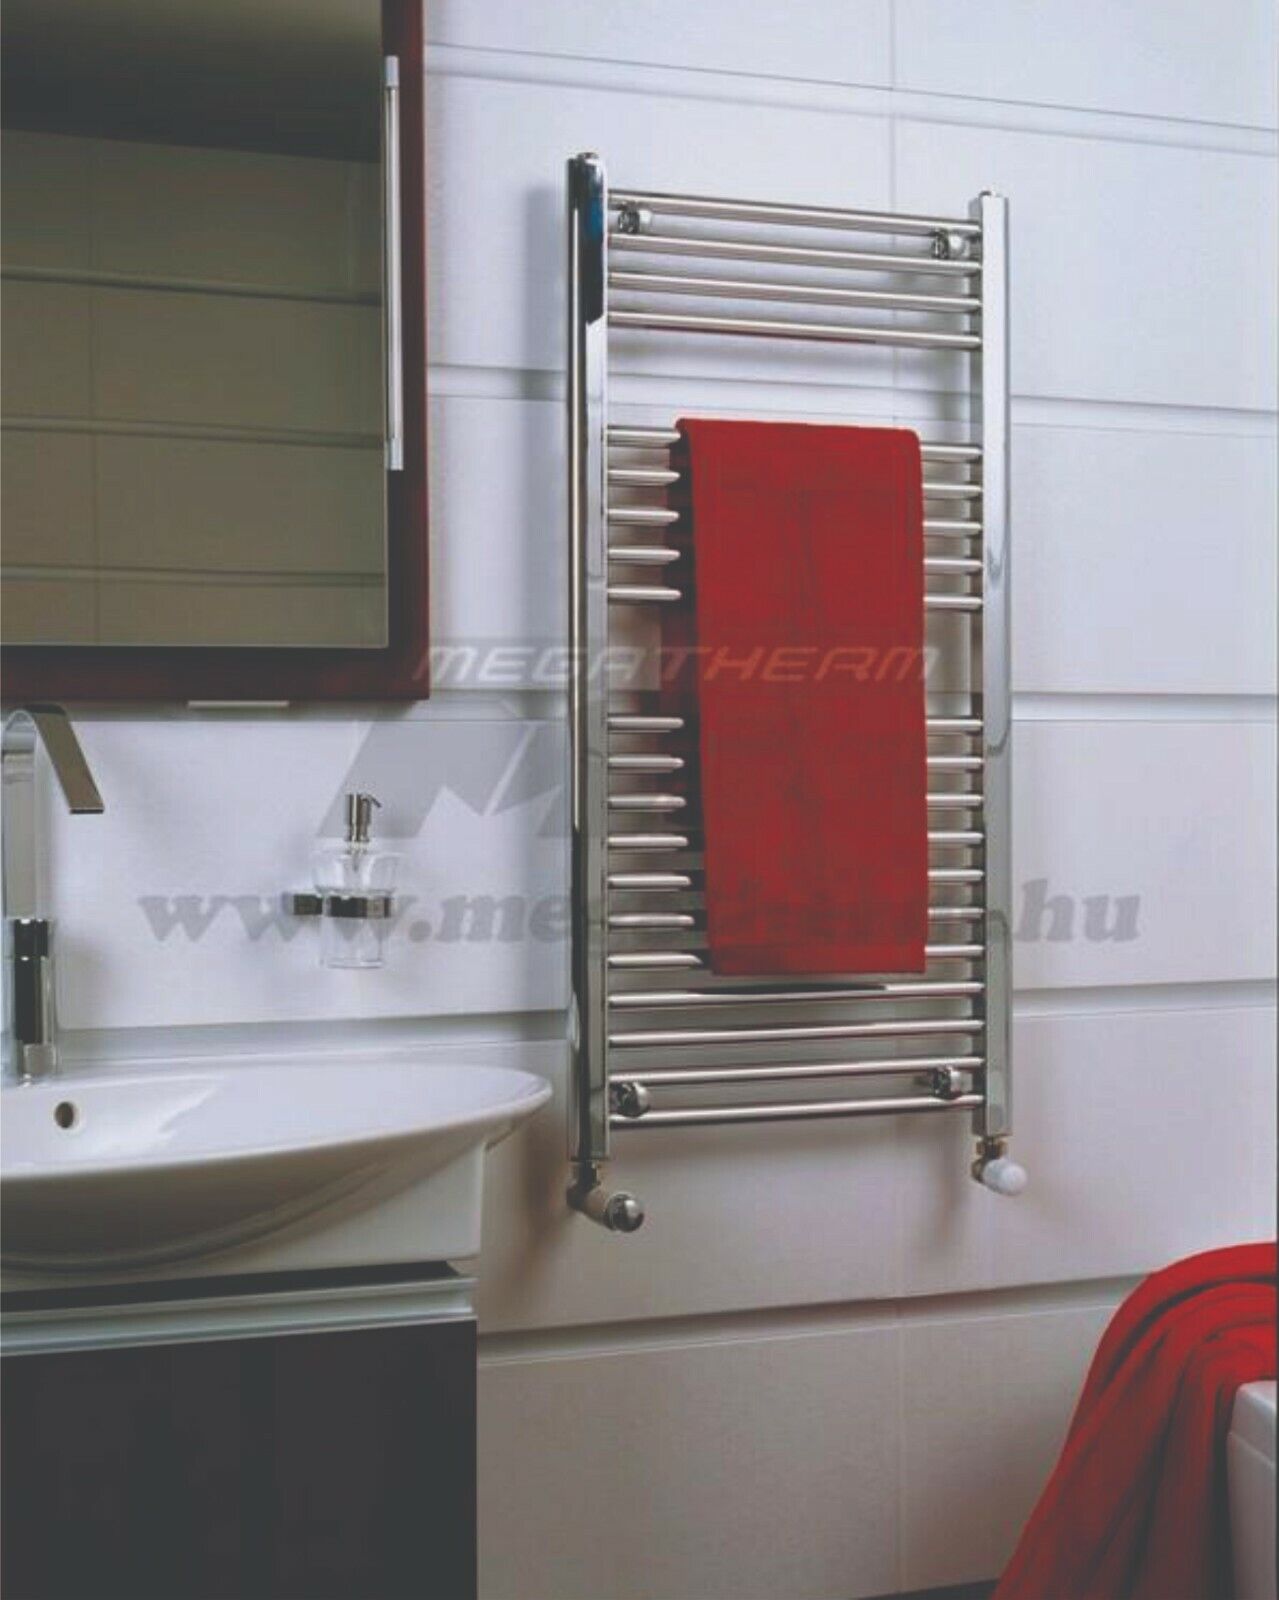 Cordivari (Italy) Chrome Hydronic Towel Warmer Curved 20\'\'x28\'\' w/ valve kit